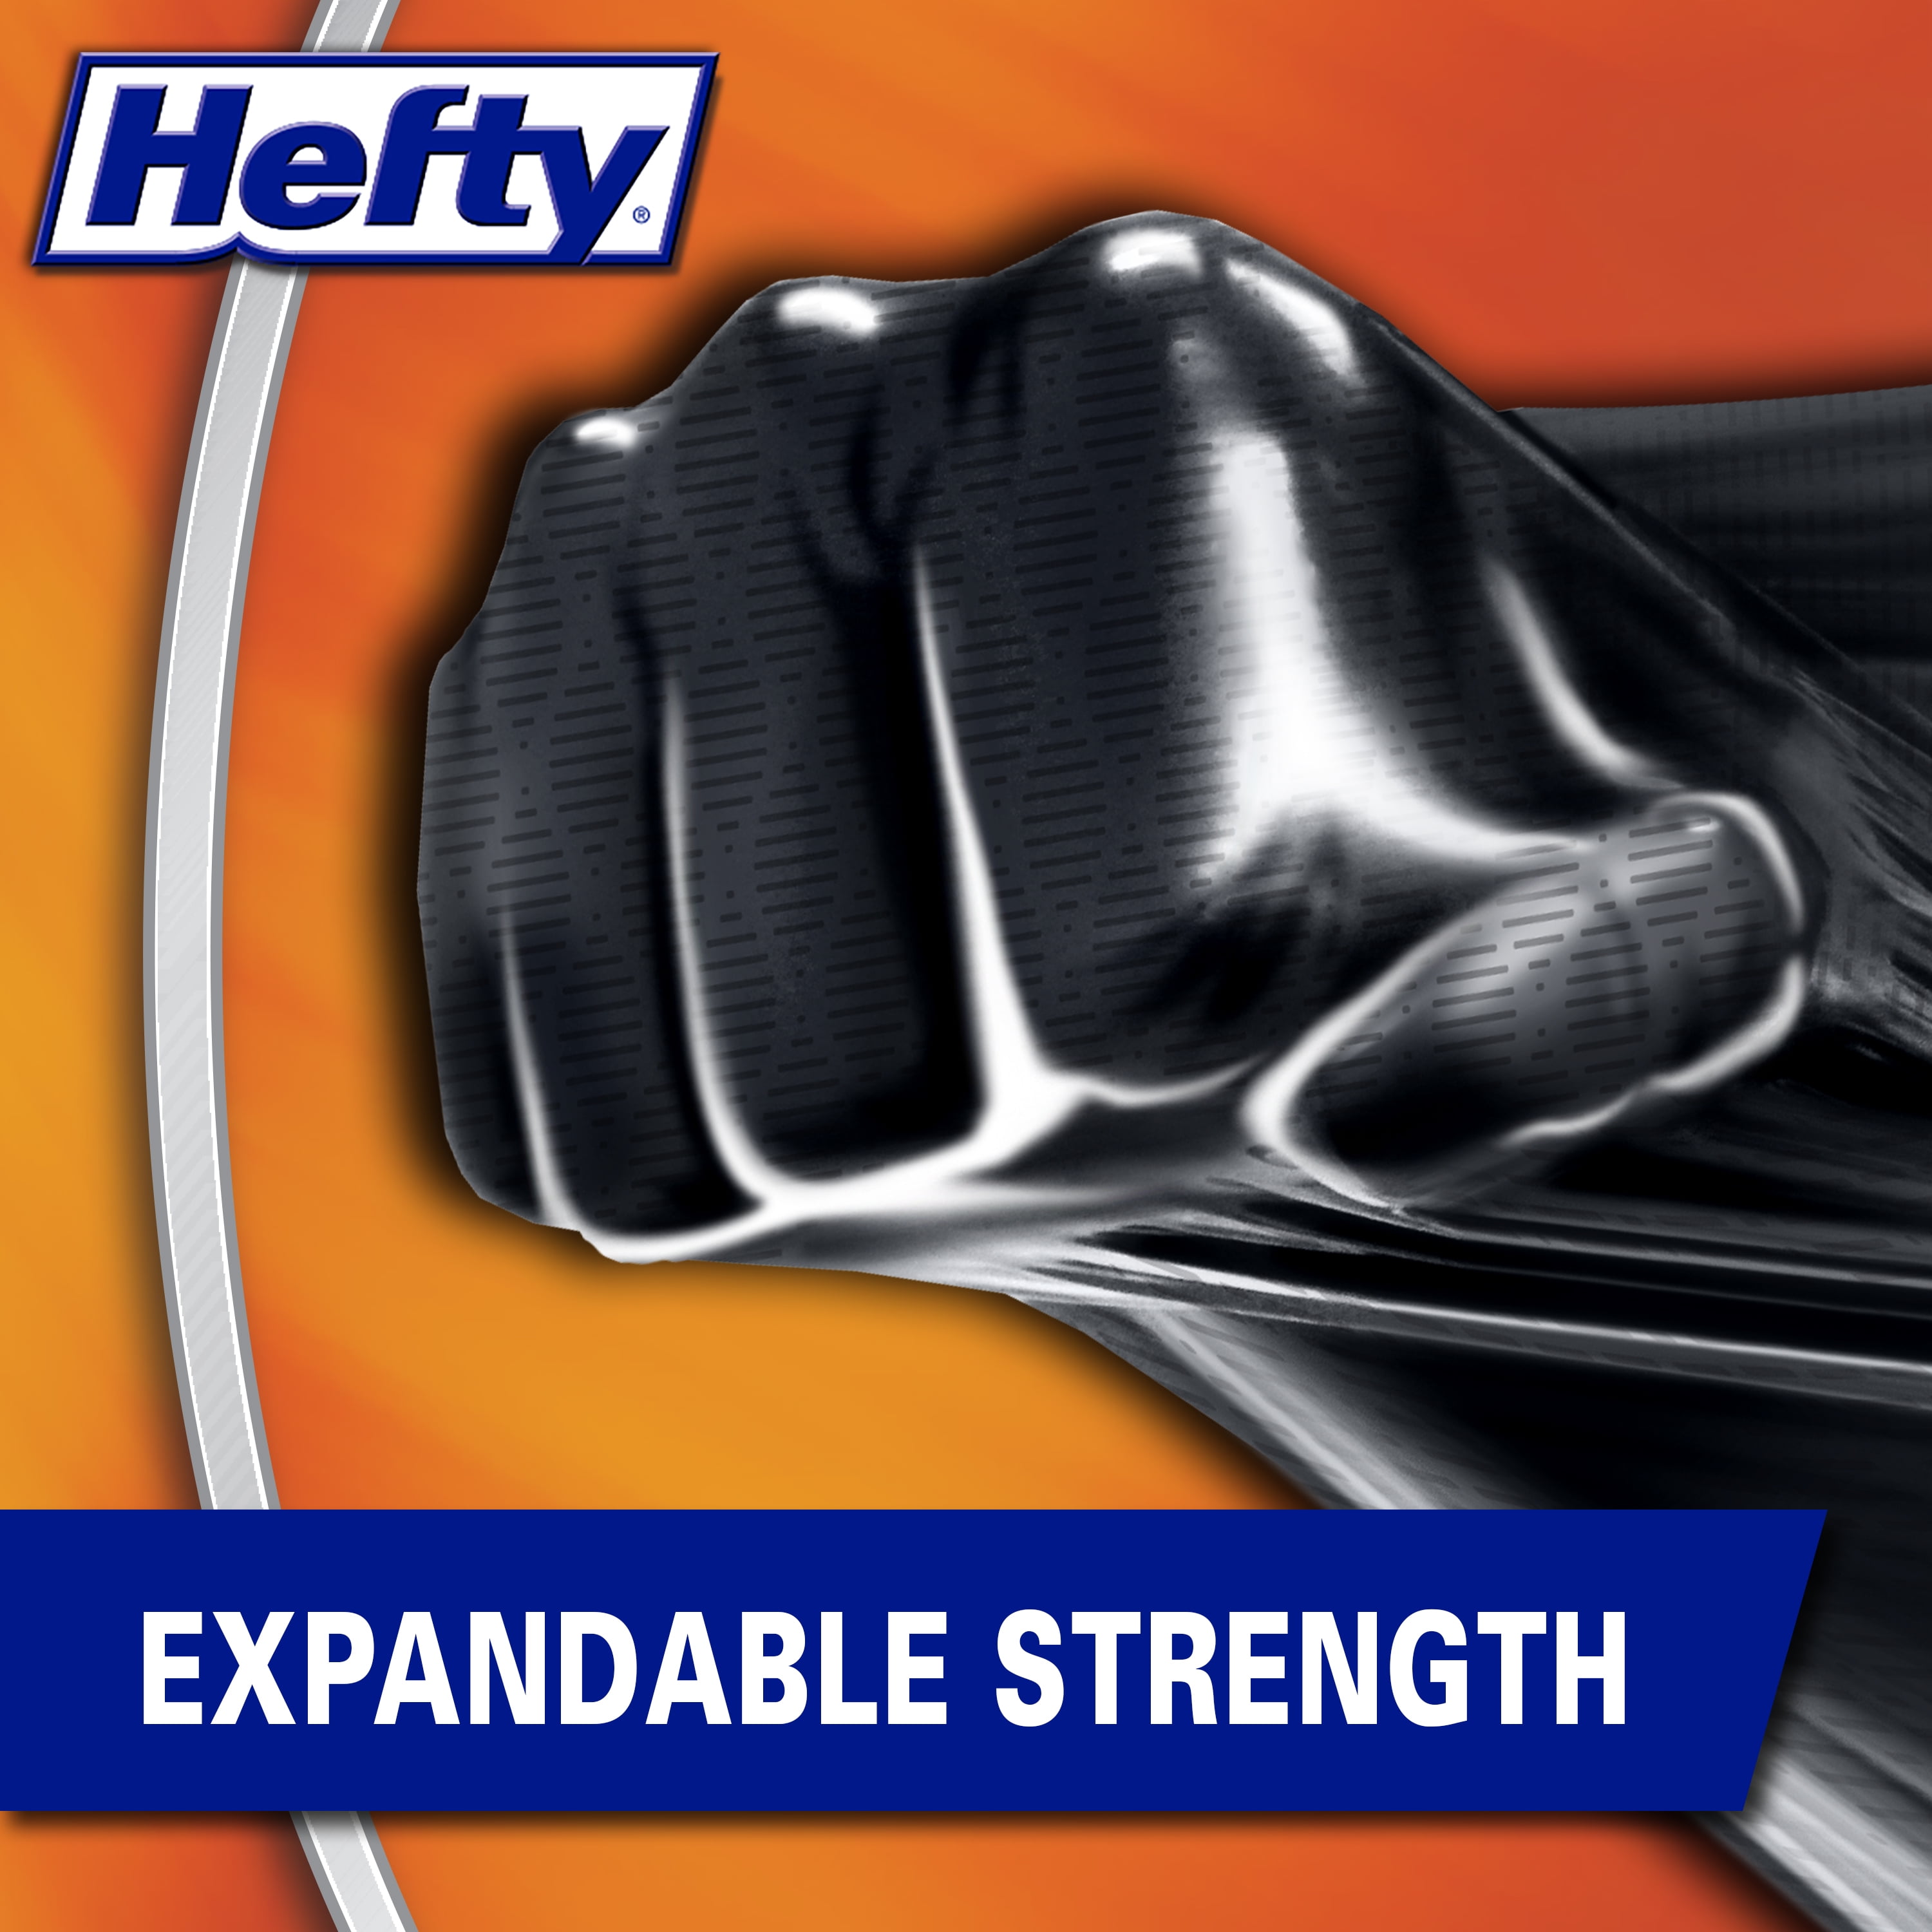 Hefty Ultra Strong 30 gal Trash Bags Drawstring 25 pk 1.05 mil - Ace  Hardware